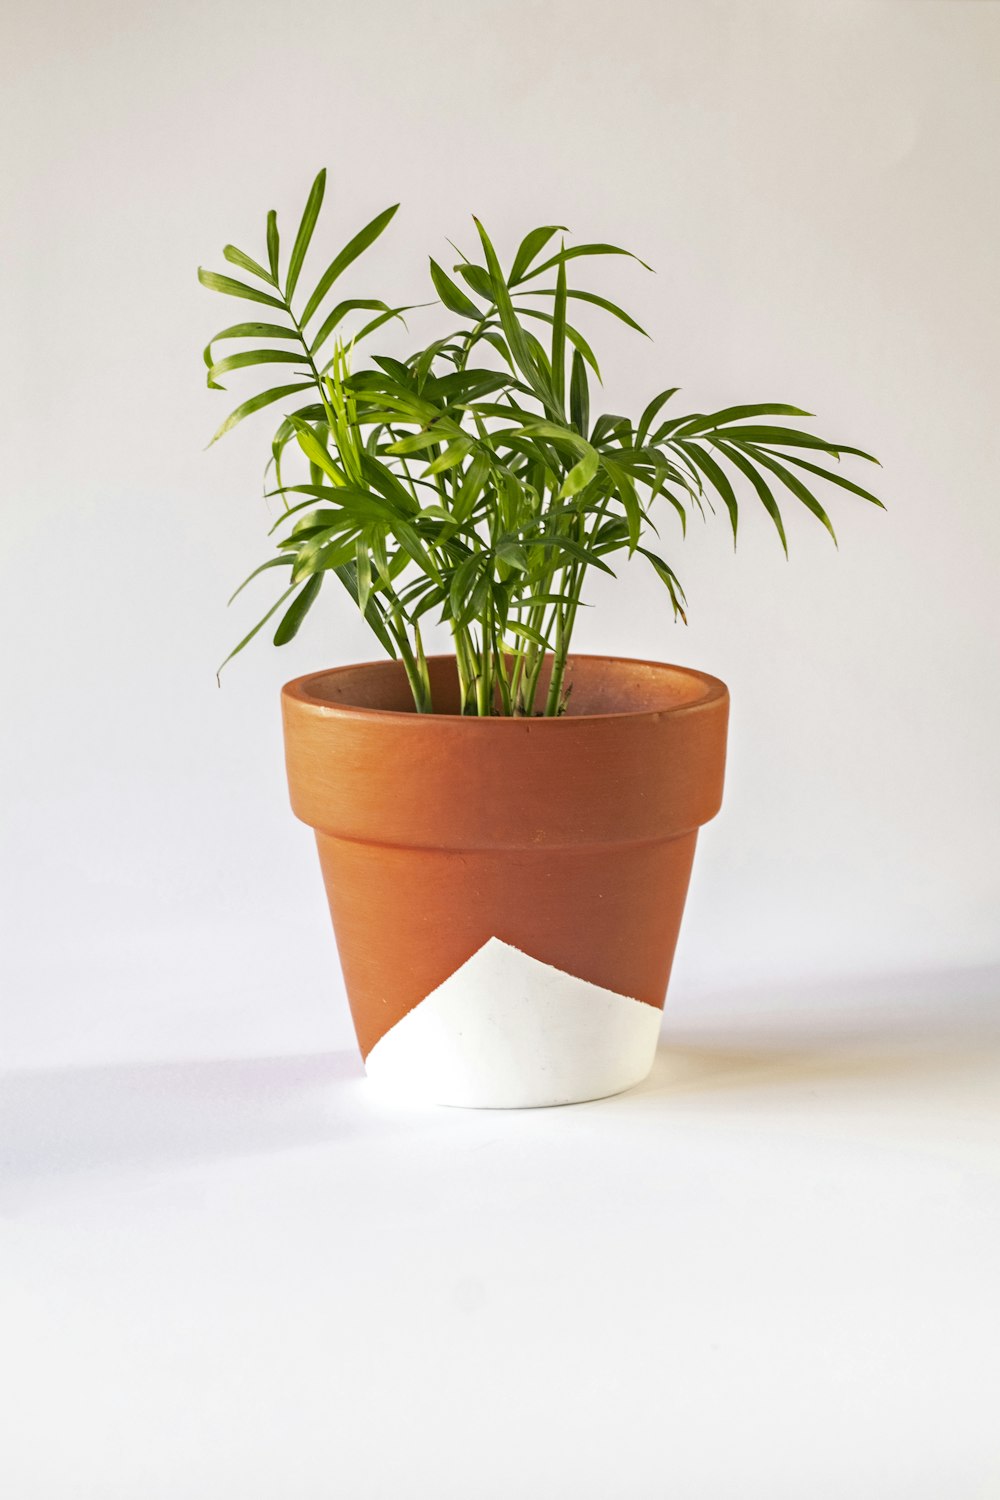 pianta verde su vaso bianco e marrone